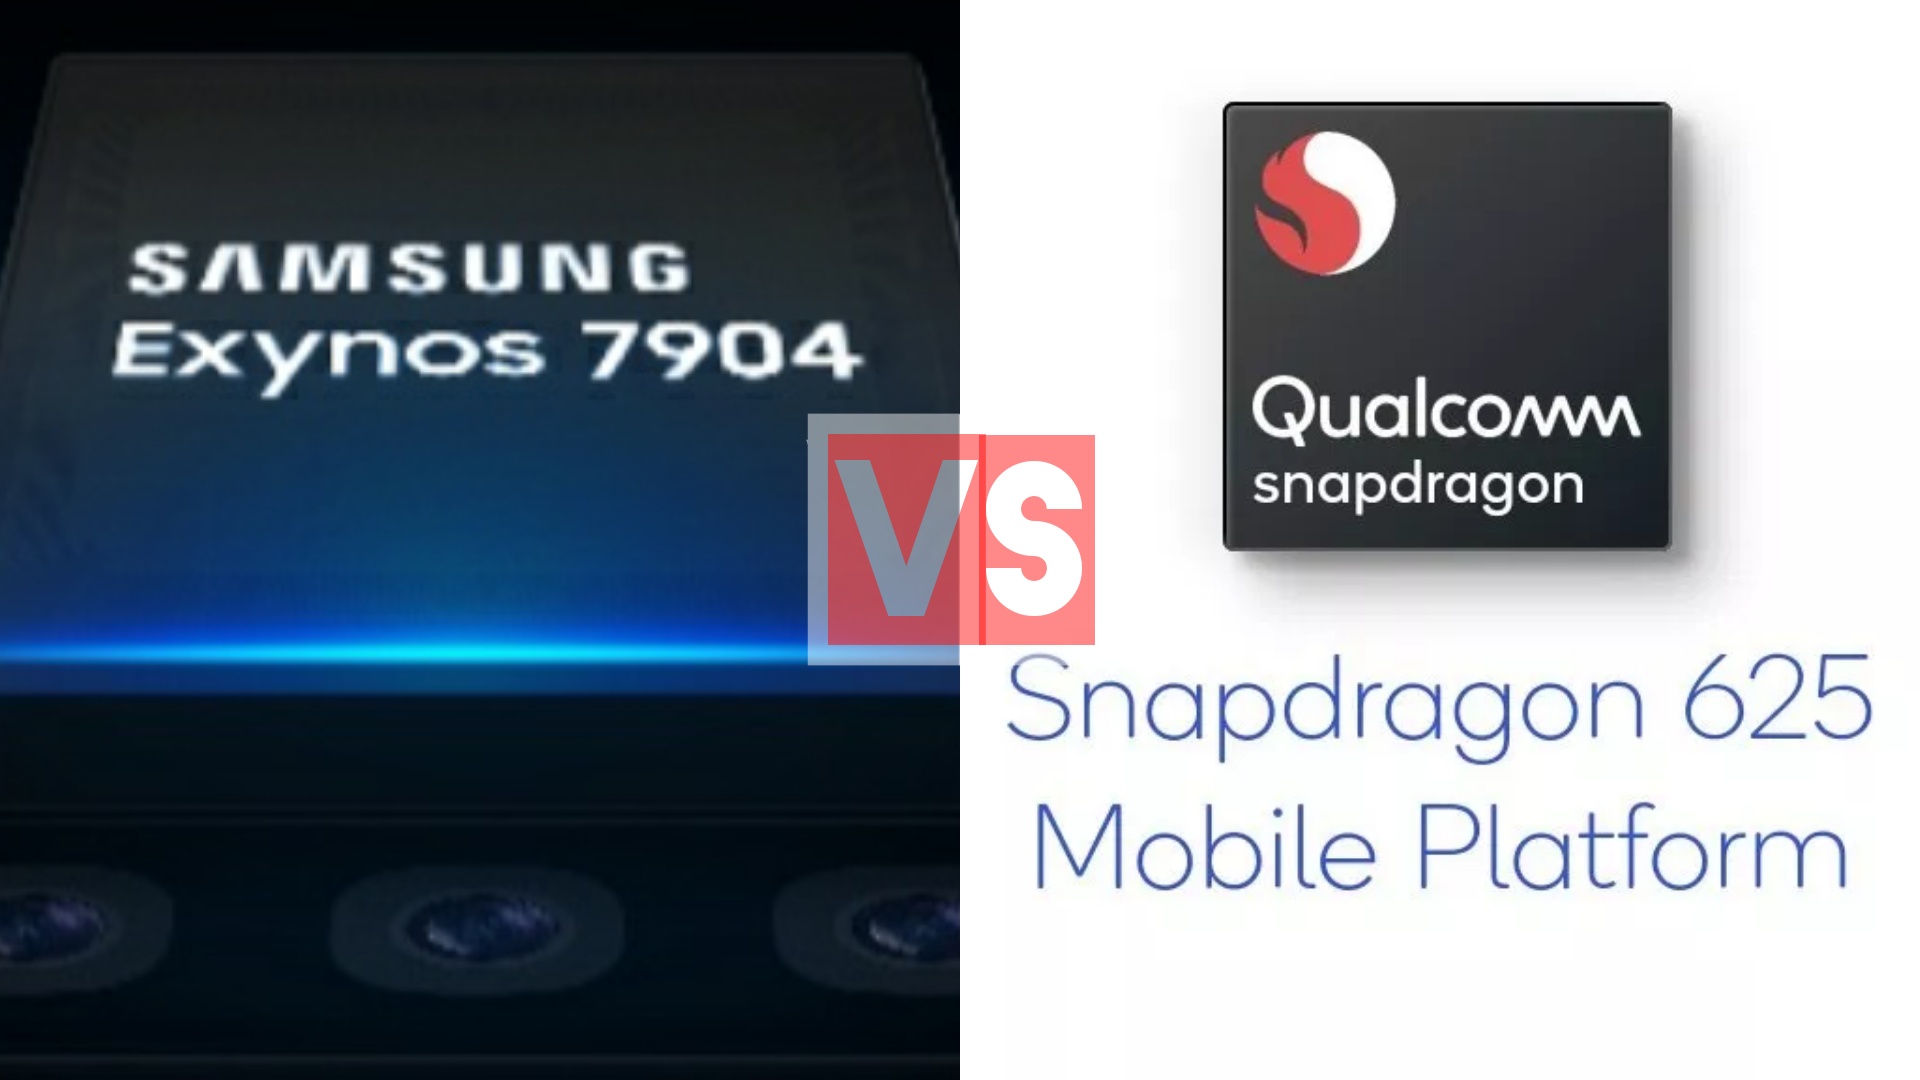 Samsung Exynos 7904 Vs Qualcomm Snapdragon 625